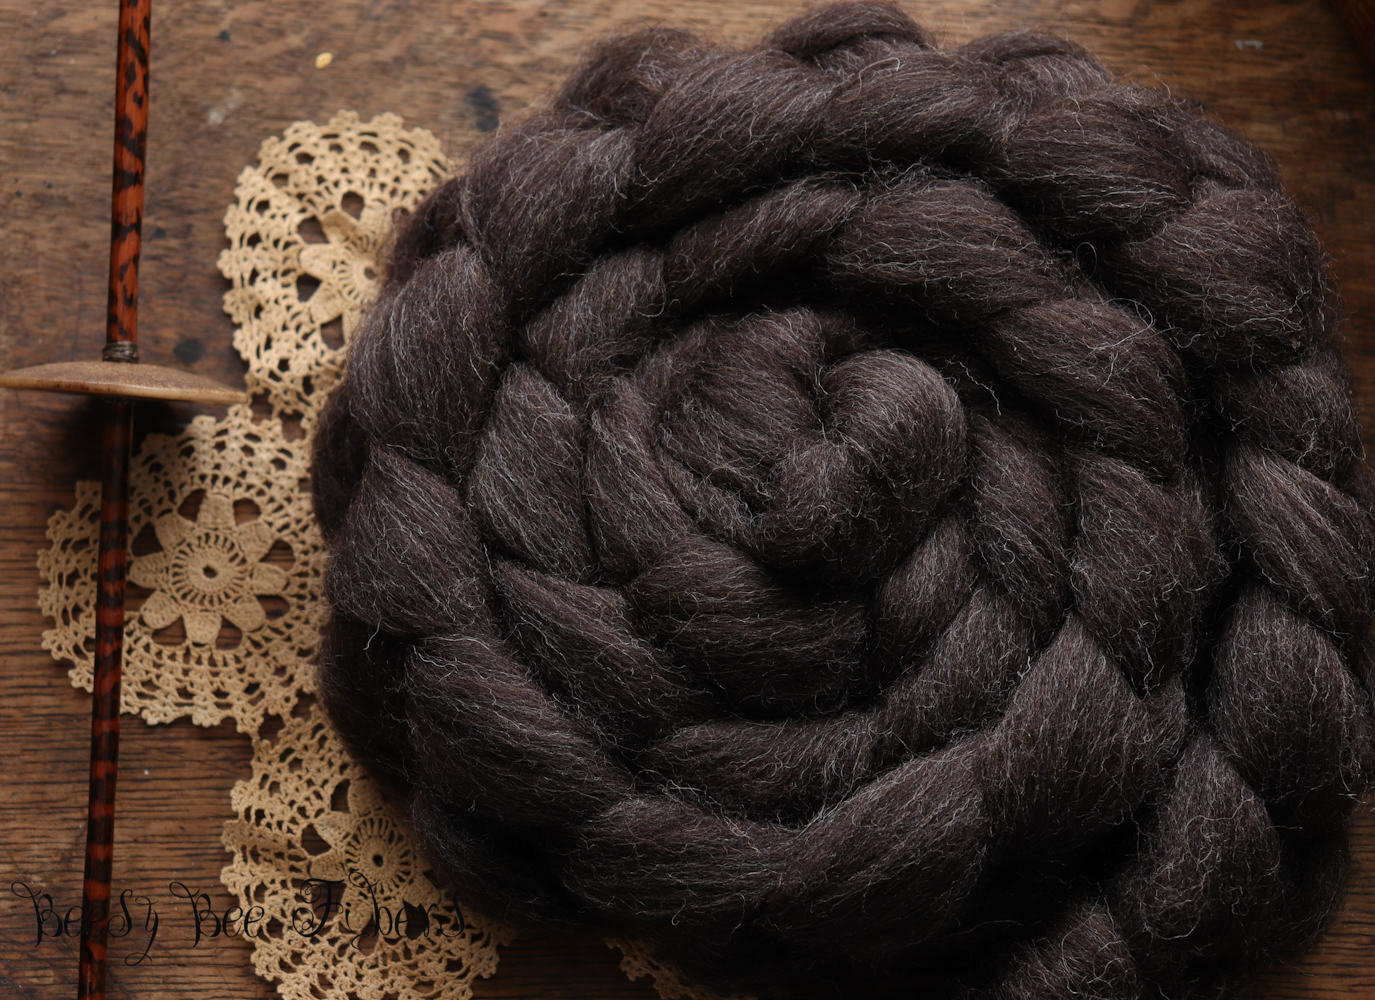 Shetland Natural Brown Undyed Combed Top Wool Roving Spinning Felting Fiber 4 Oz